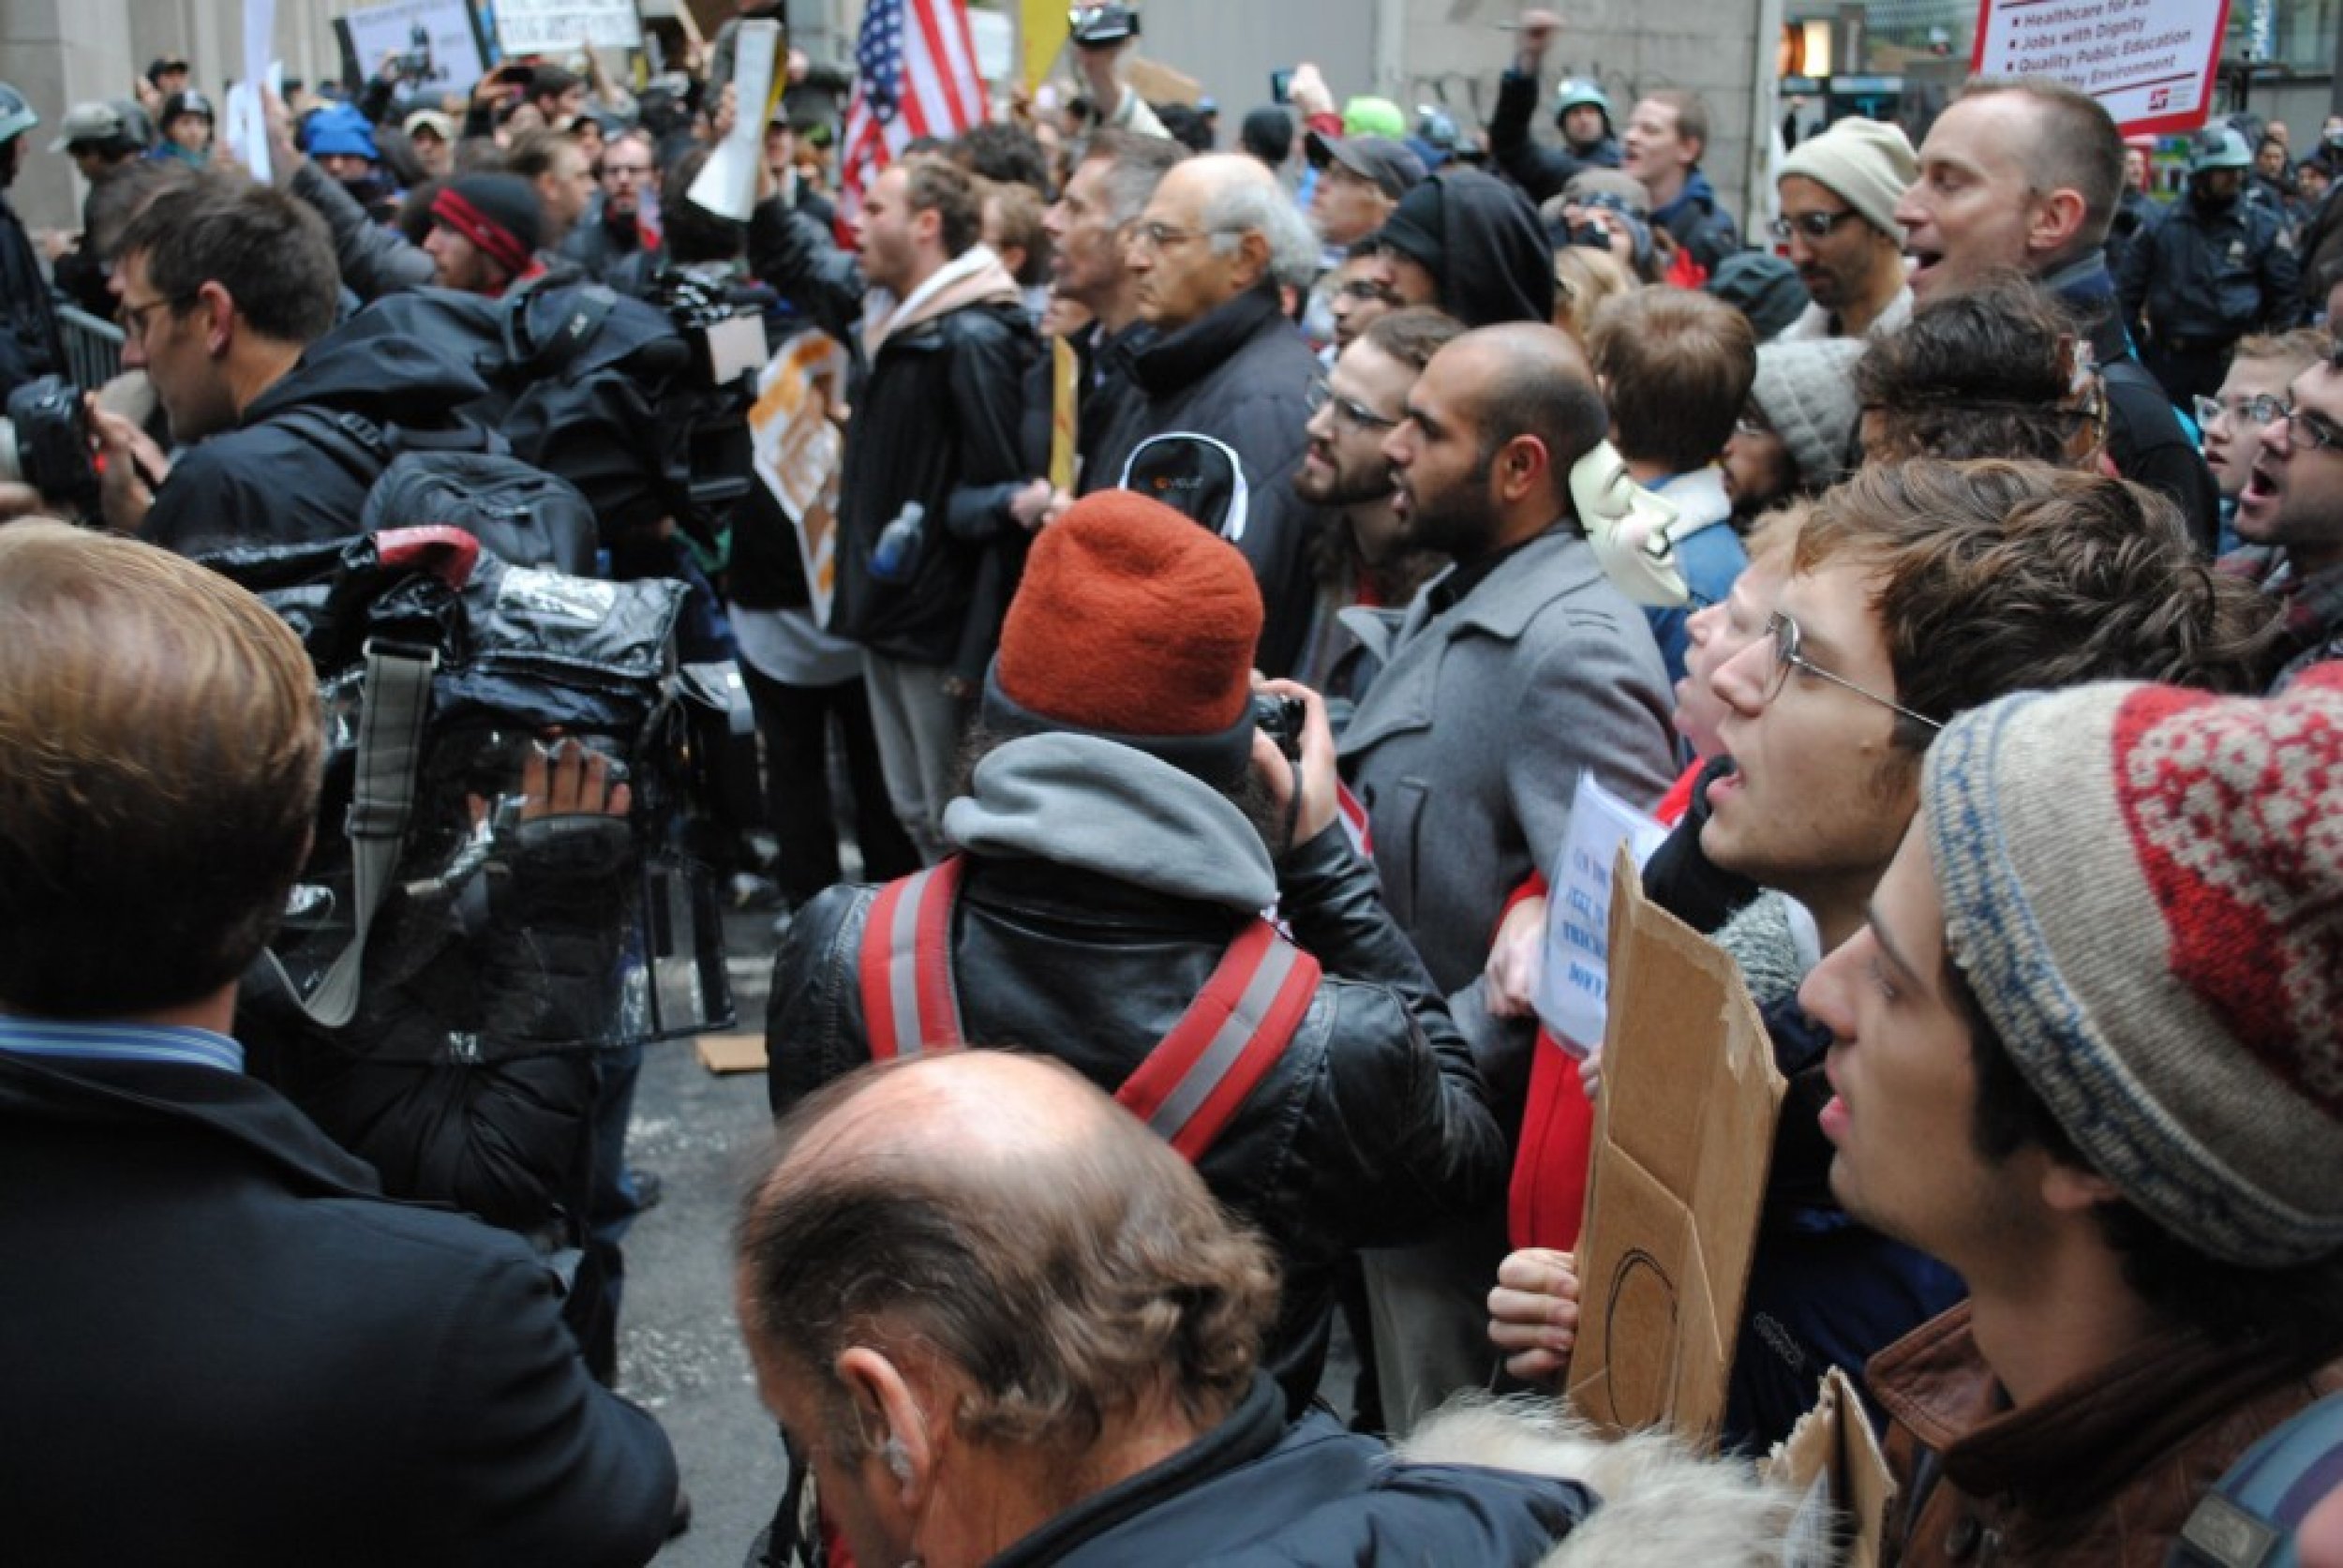 Occupy Wall Street 2